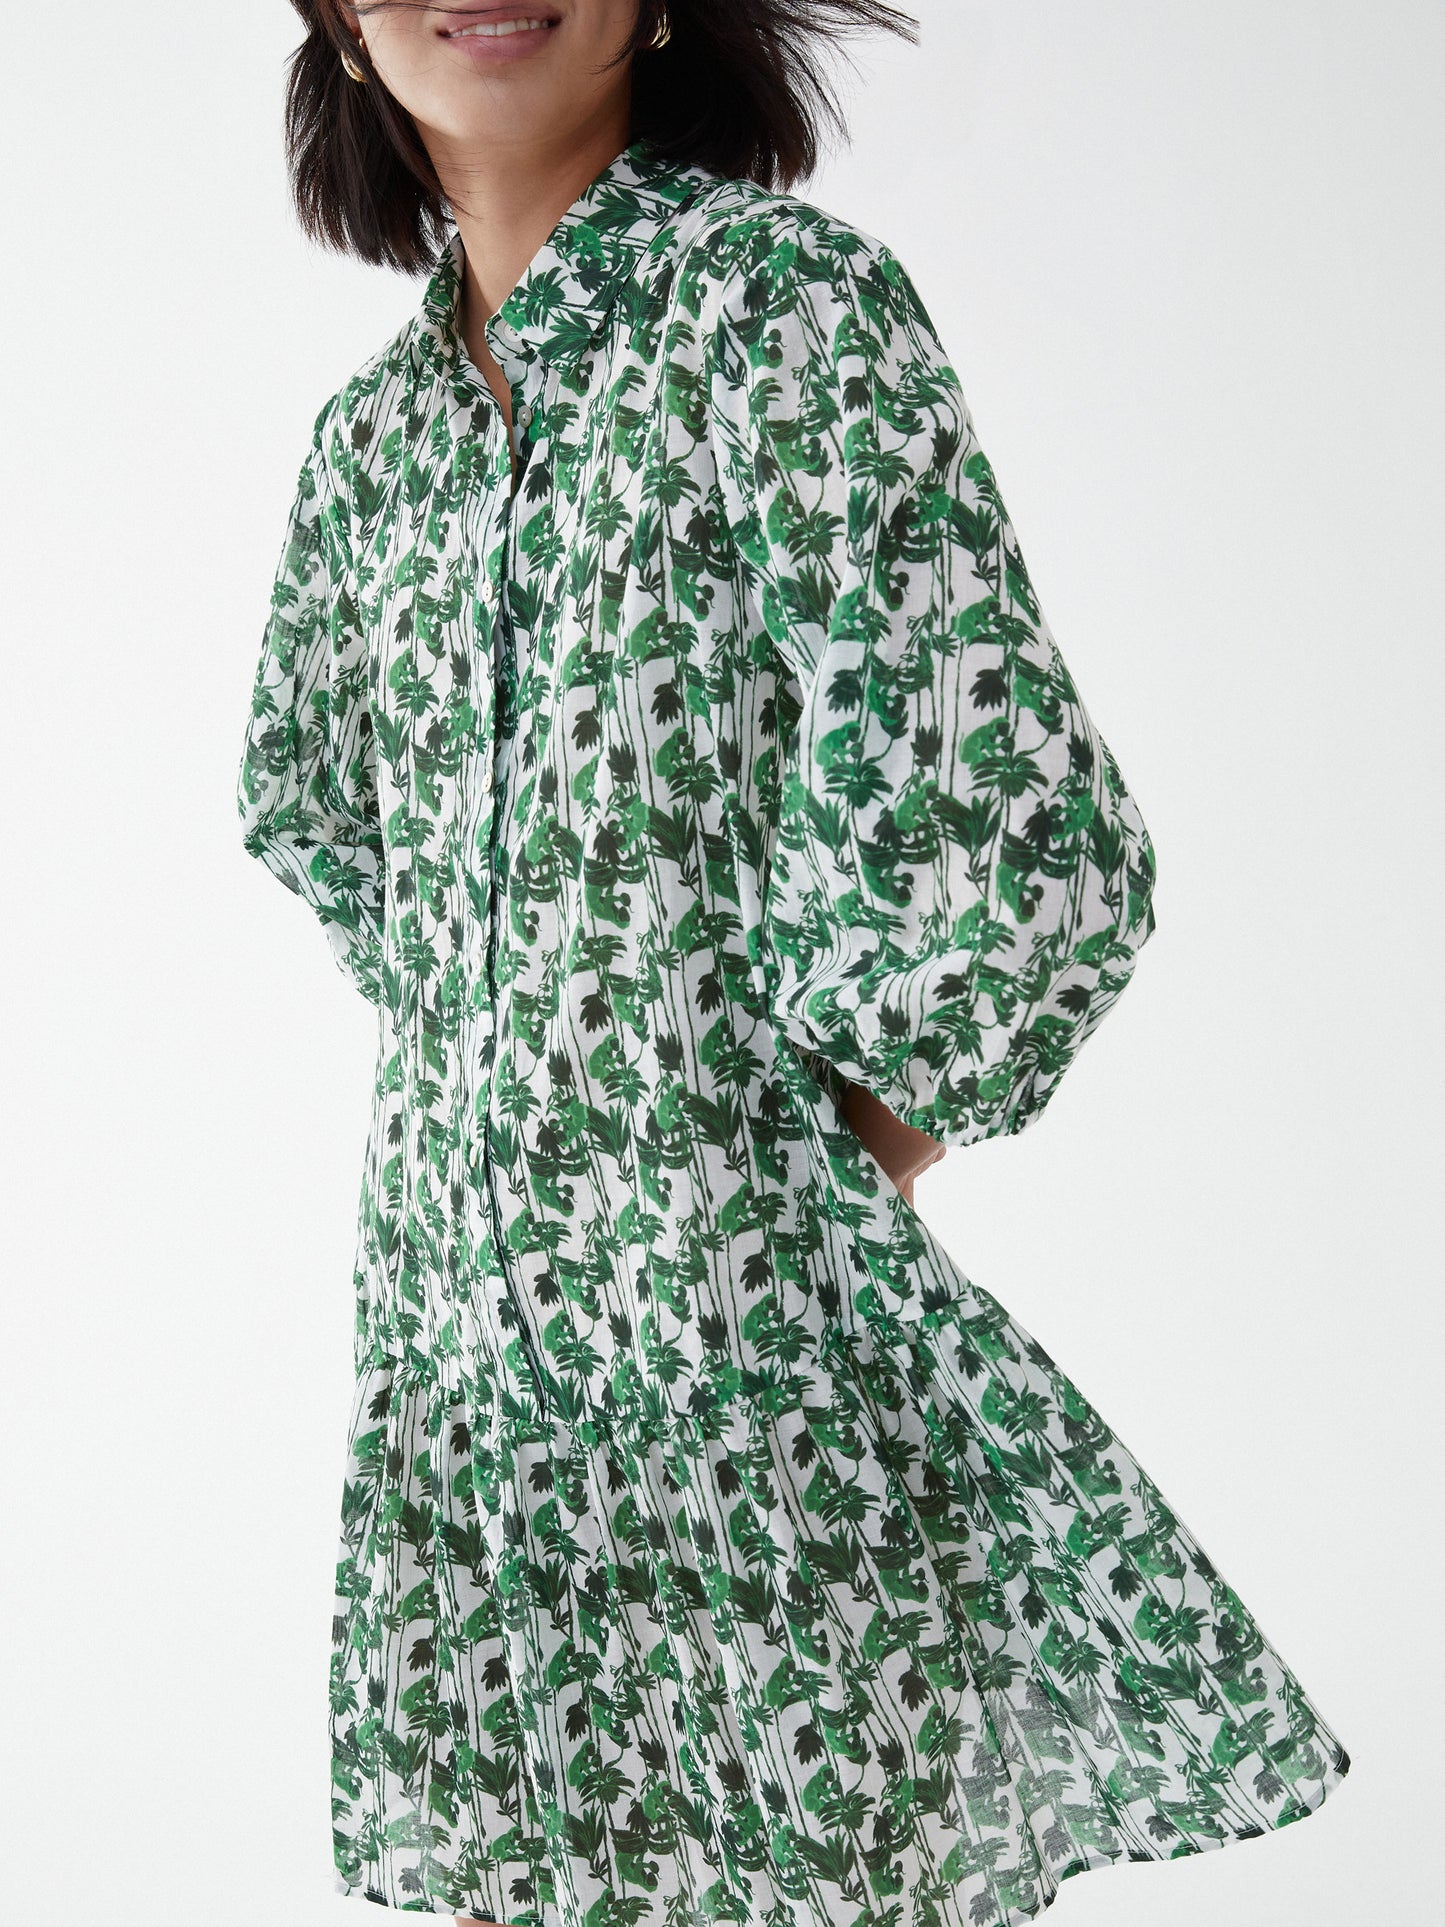 Cloruro Printed Green Dress